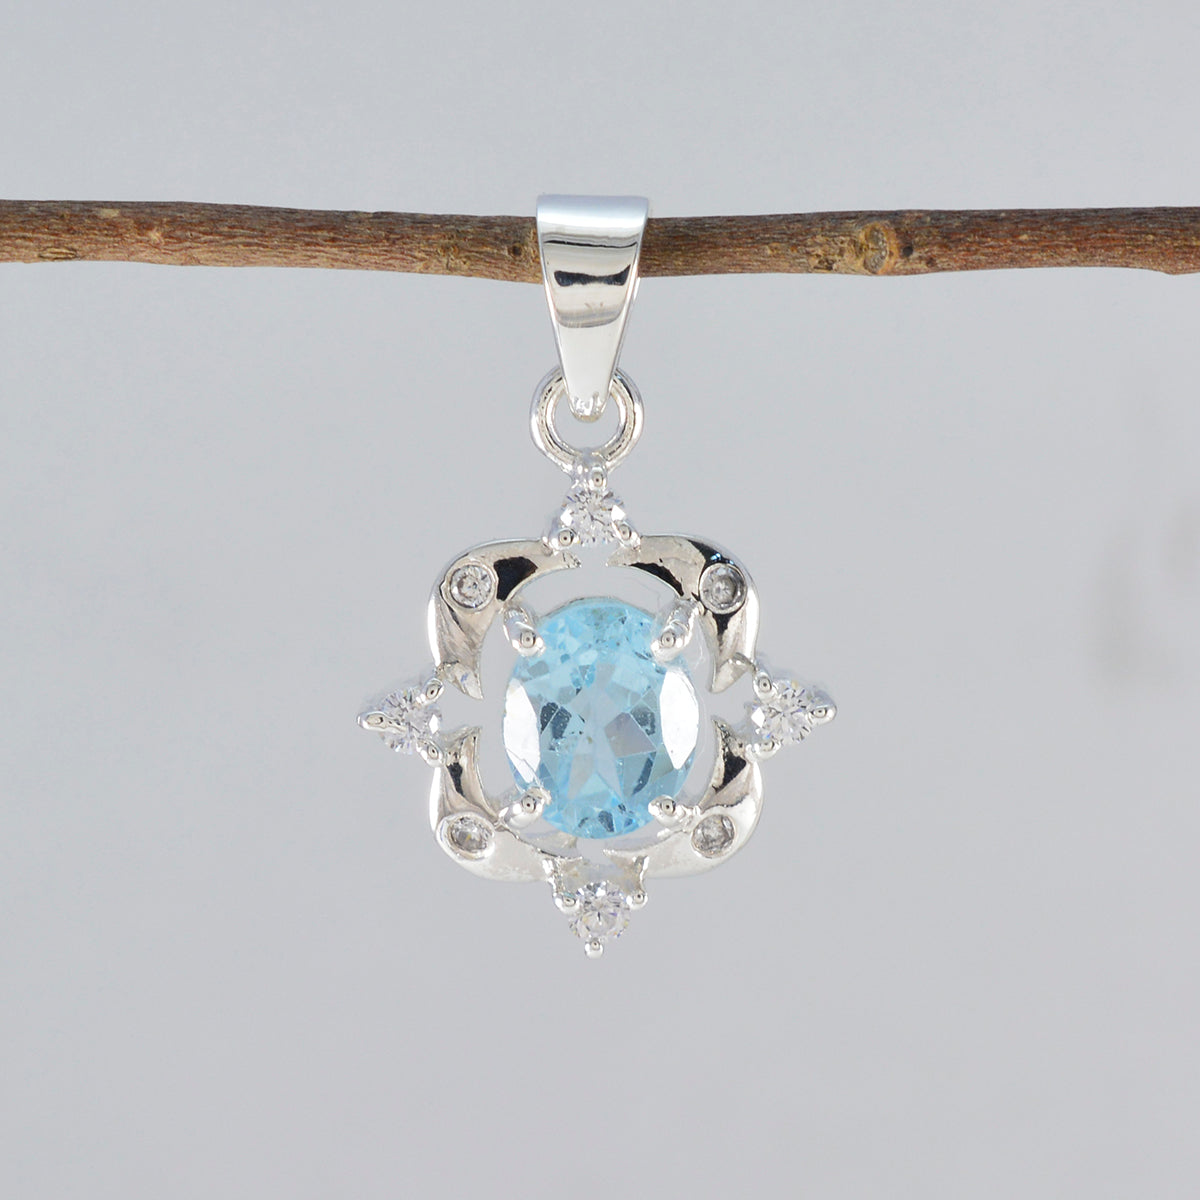 Riyo Beaut Gemstone Oval Faceted Blue Blue Topaz Sterling Silver Pendant Gift For Handmade